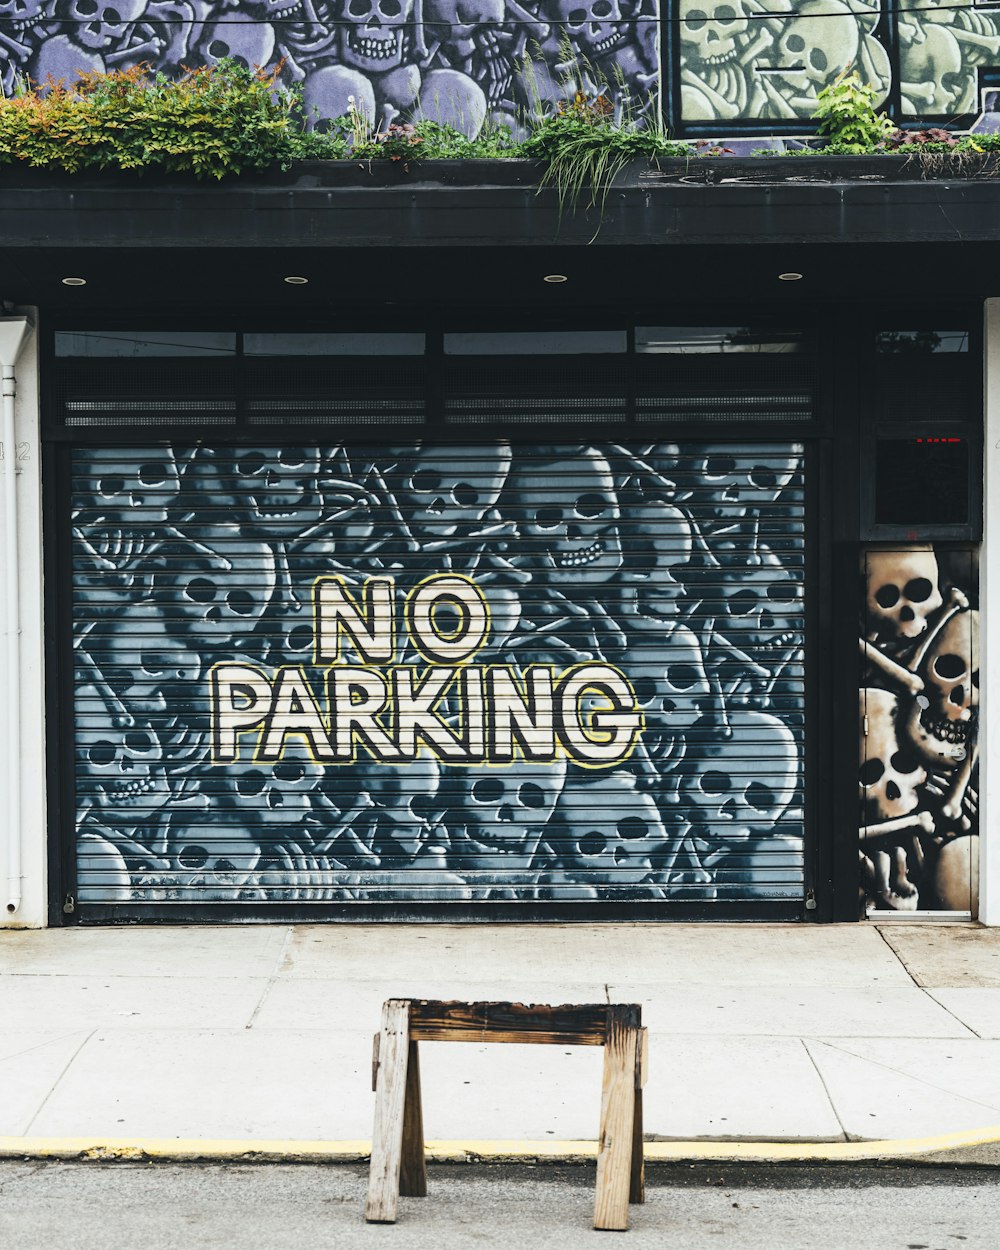 No Parking signage